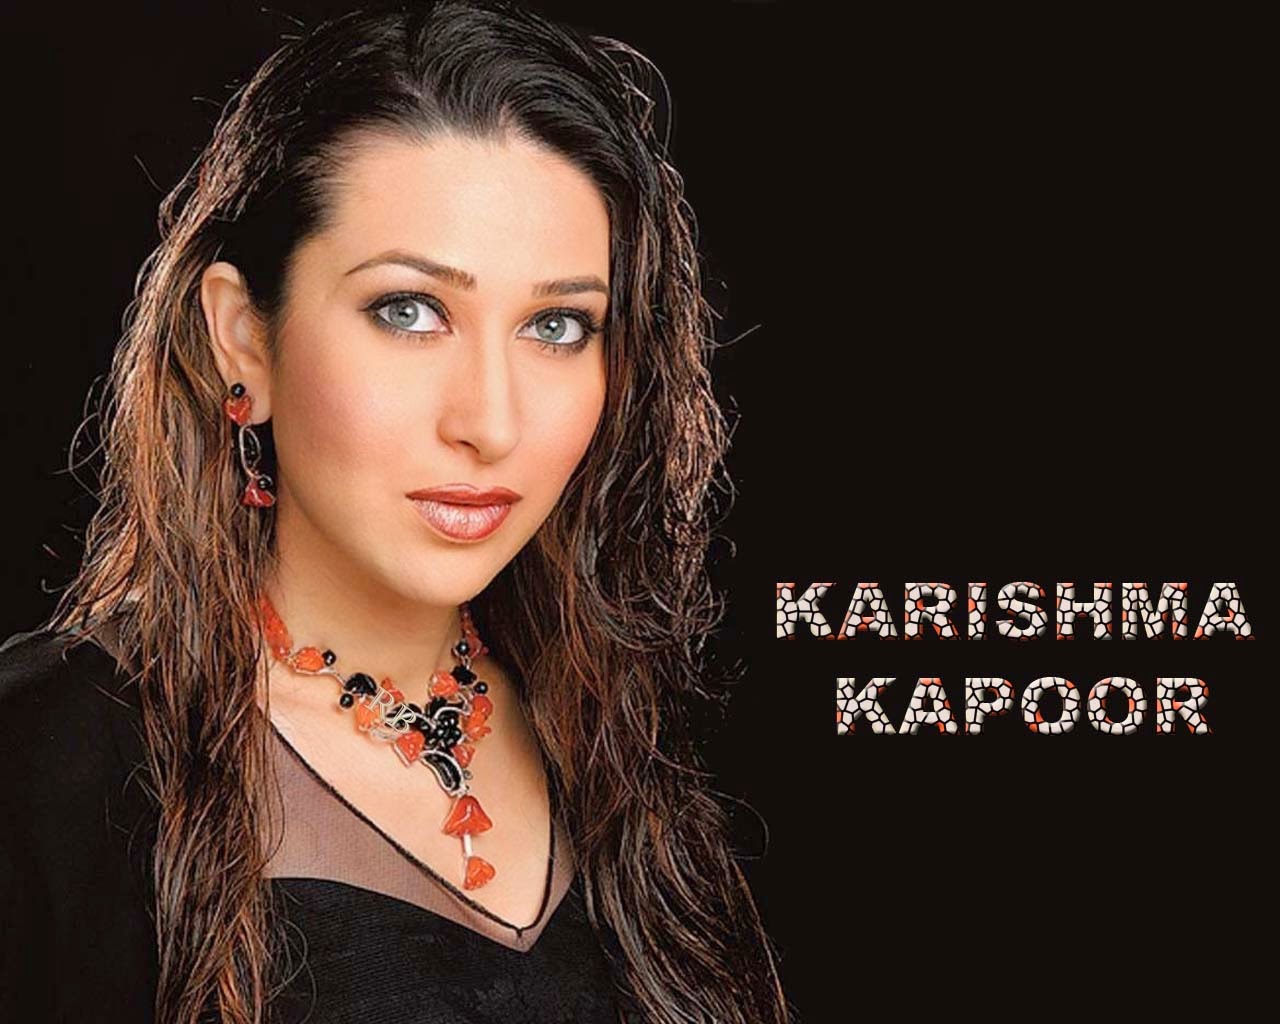 karishma kapoor Full HD bollywood actress wallpapers, download Free hot  Wallpapers